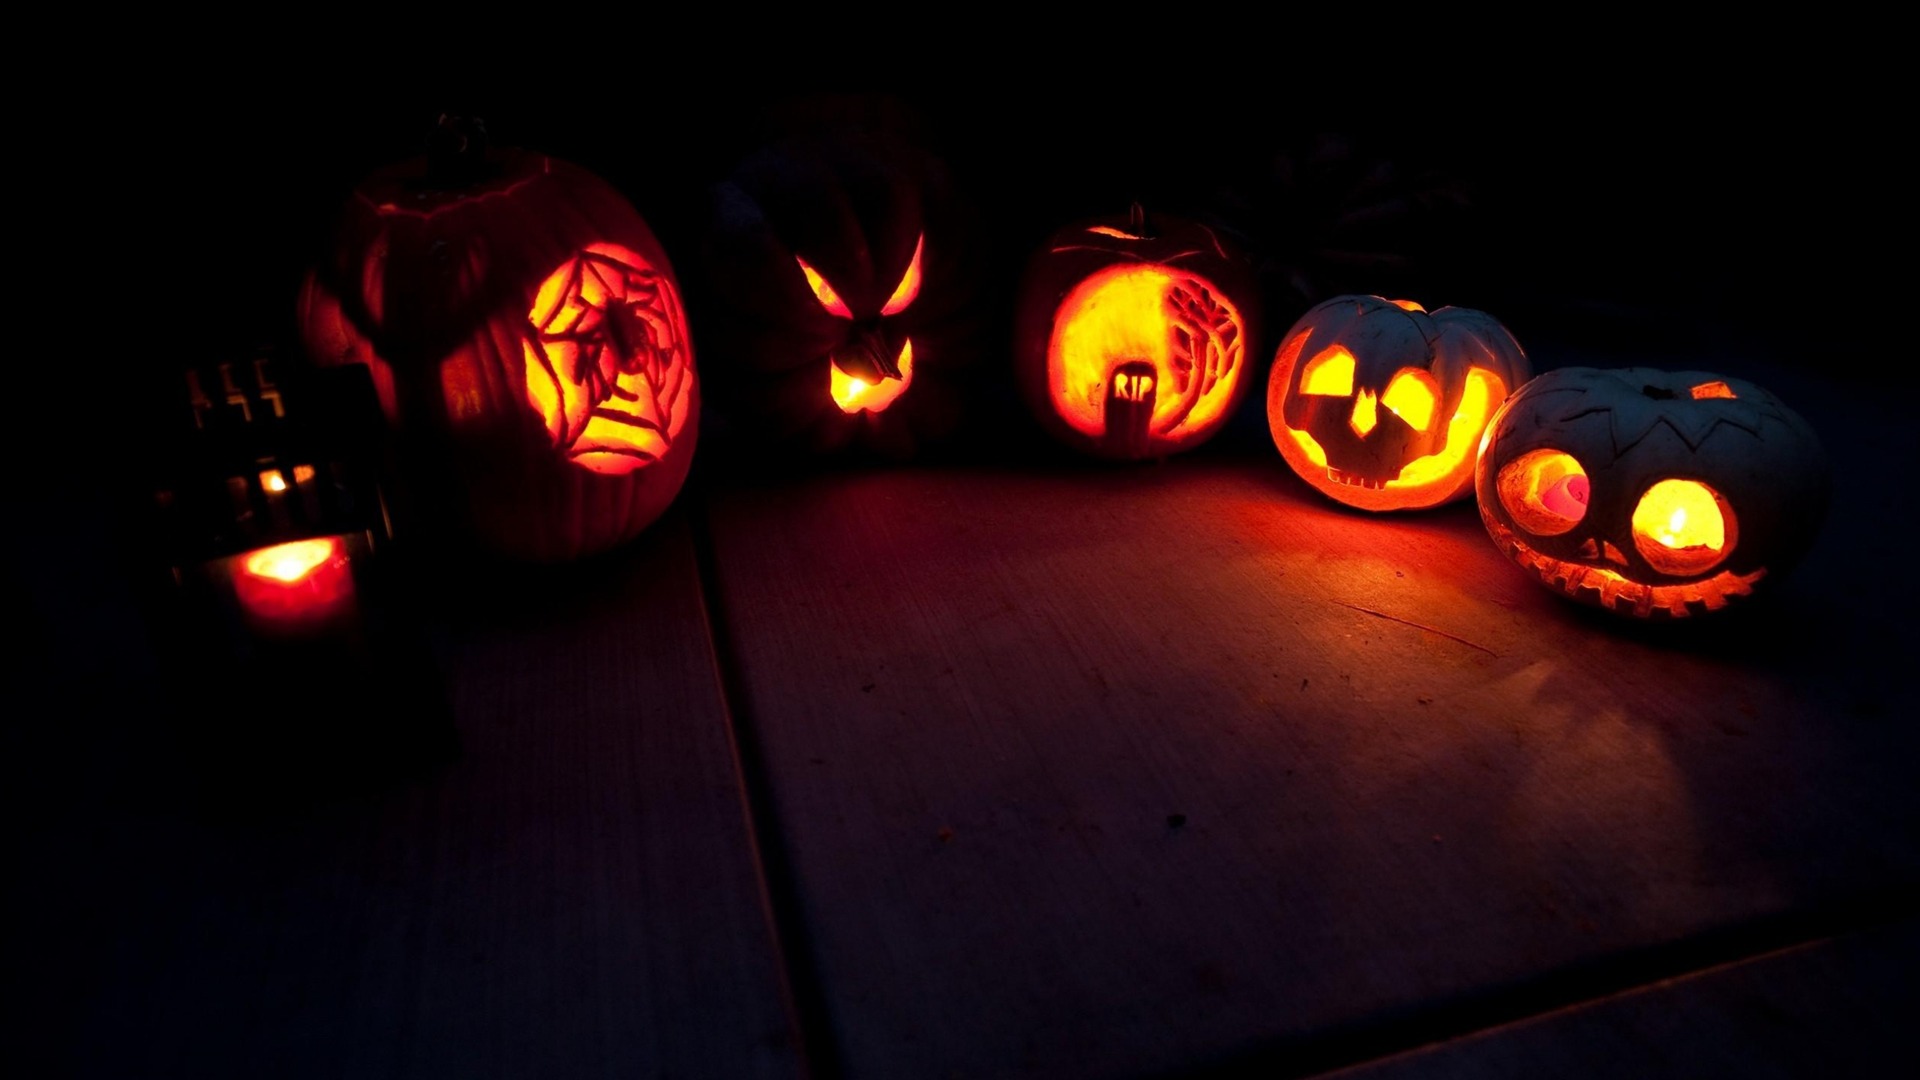  Halloween pumpkins